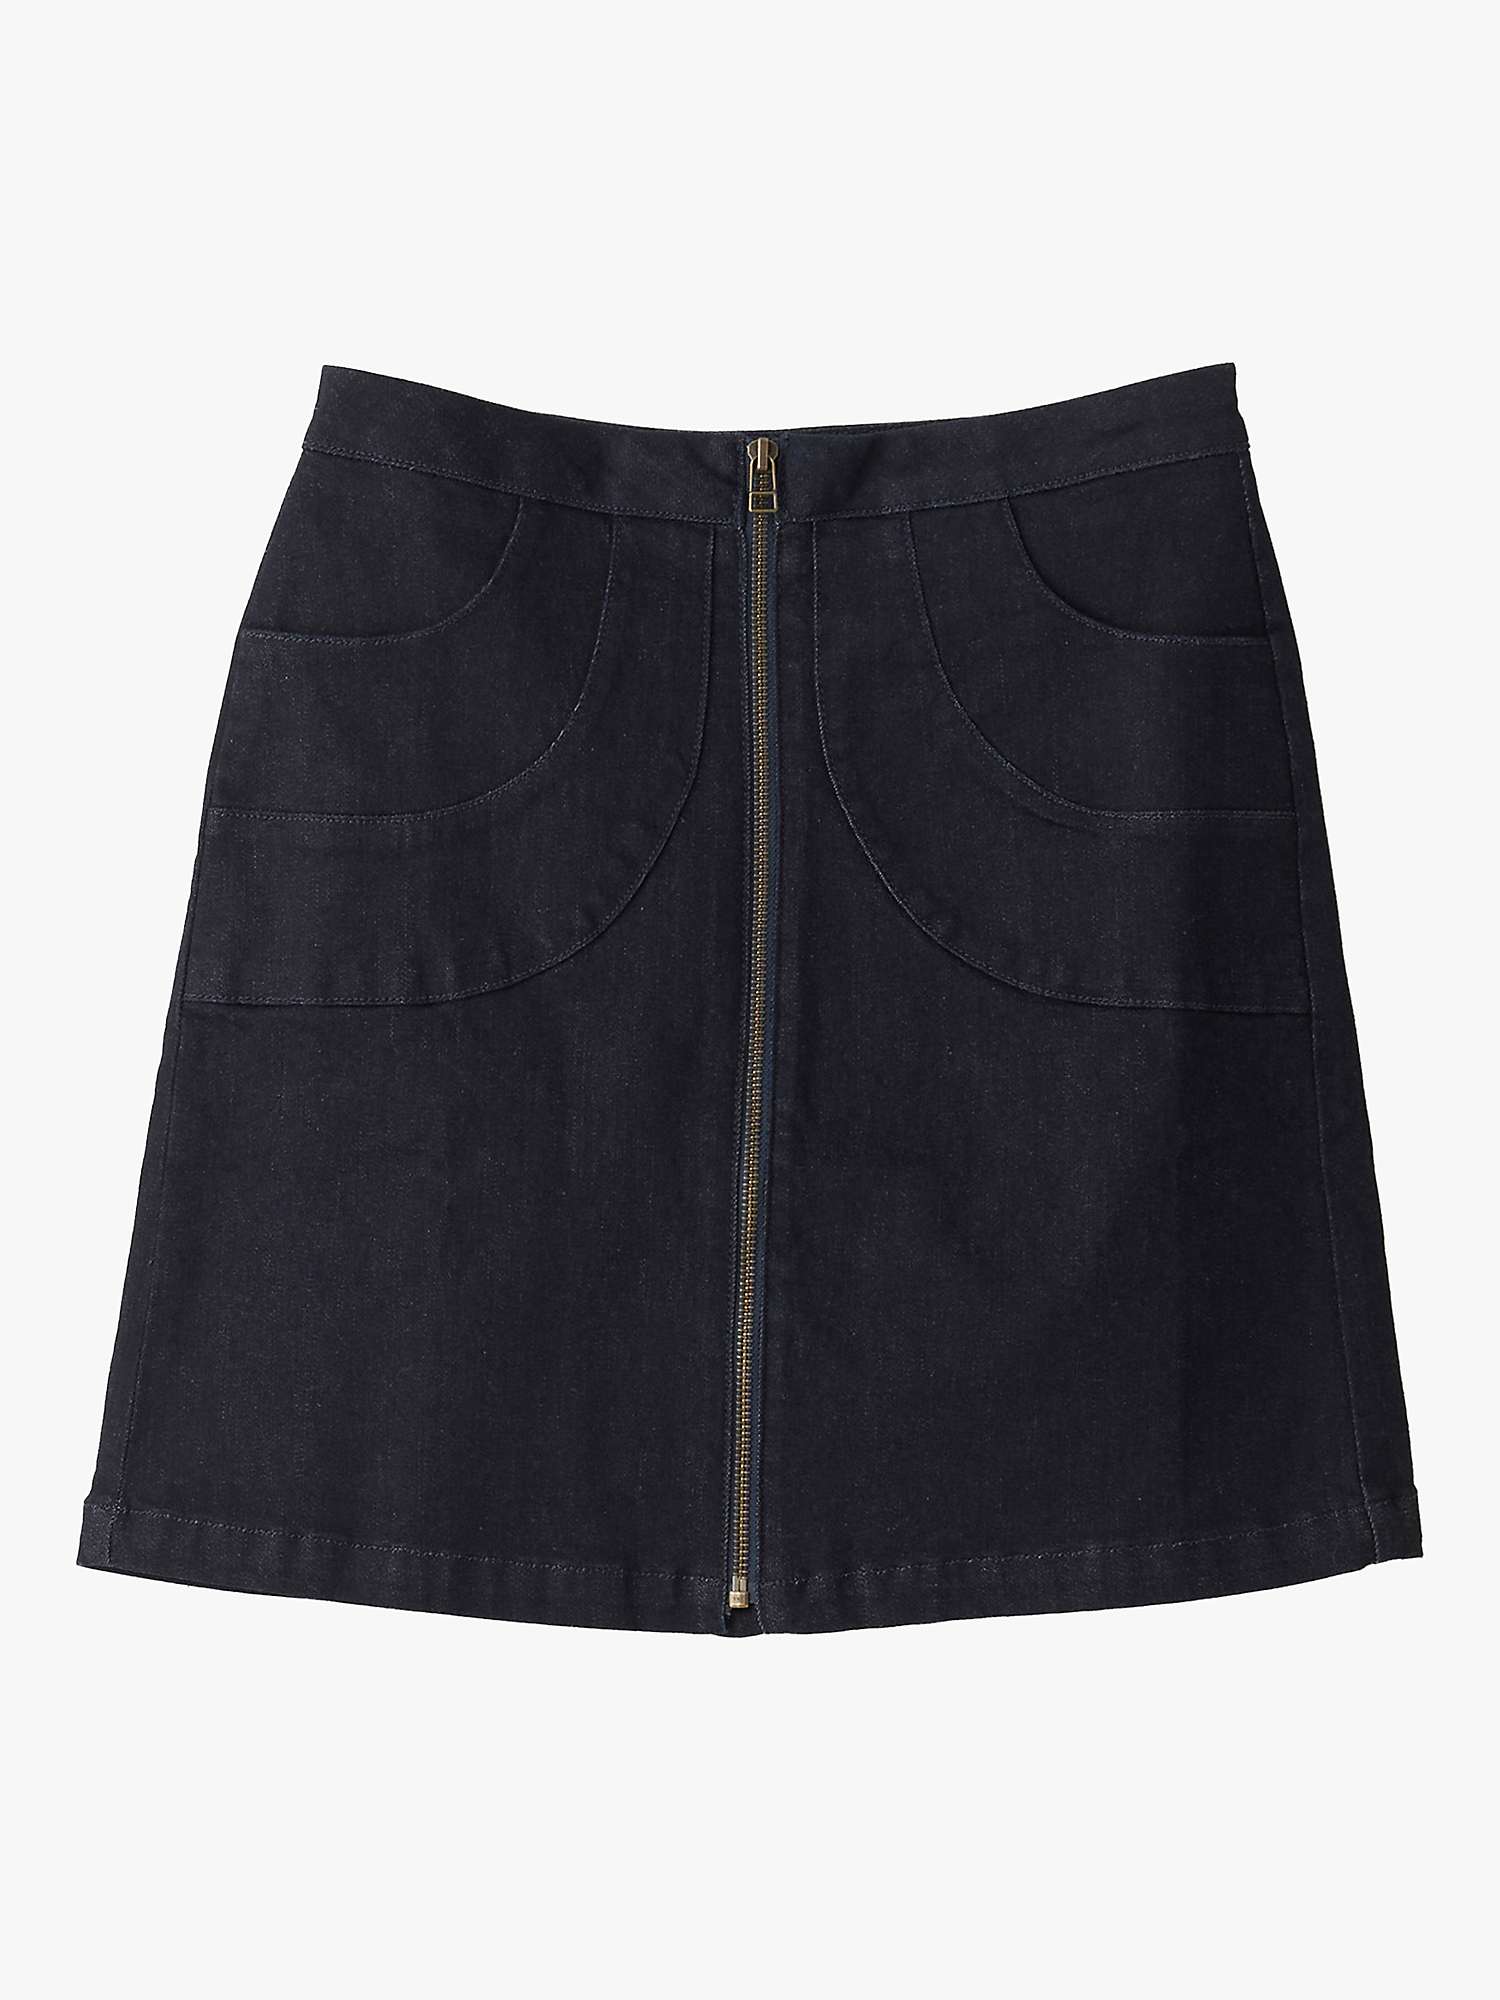 Truly Denim Mini Skirt, Midnight at John Lewis & Partners